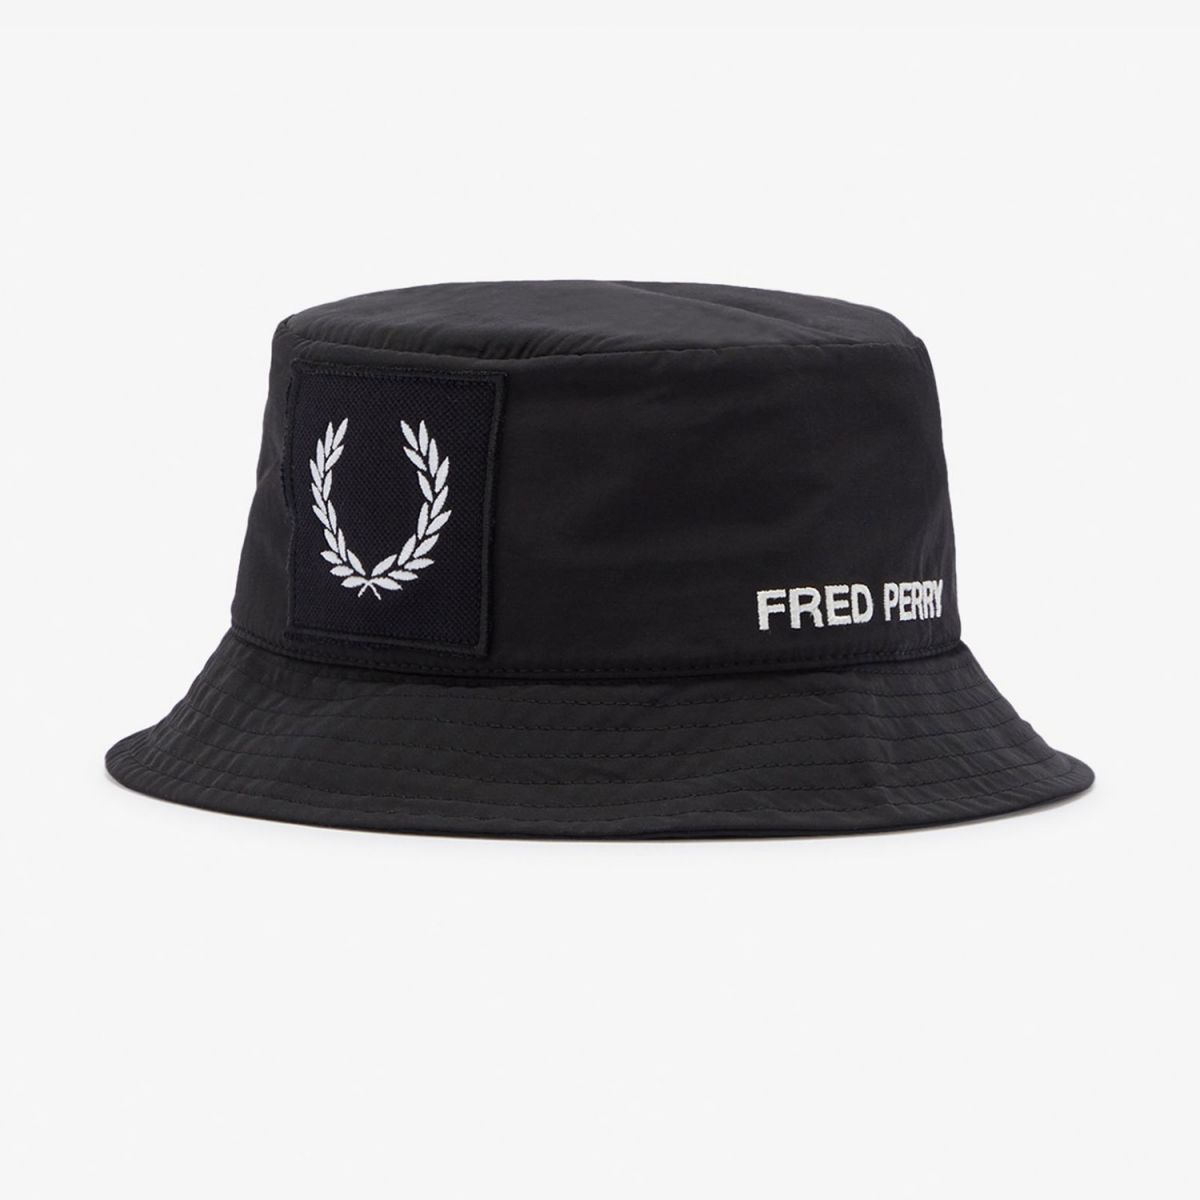 Fred Perry Laurel Wreath Branded Bucket Hat - Black